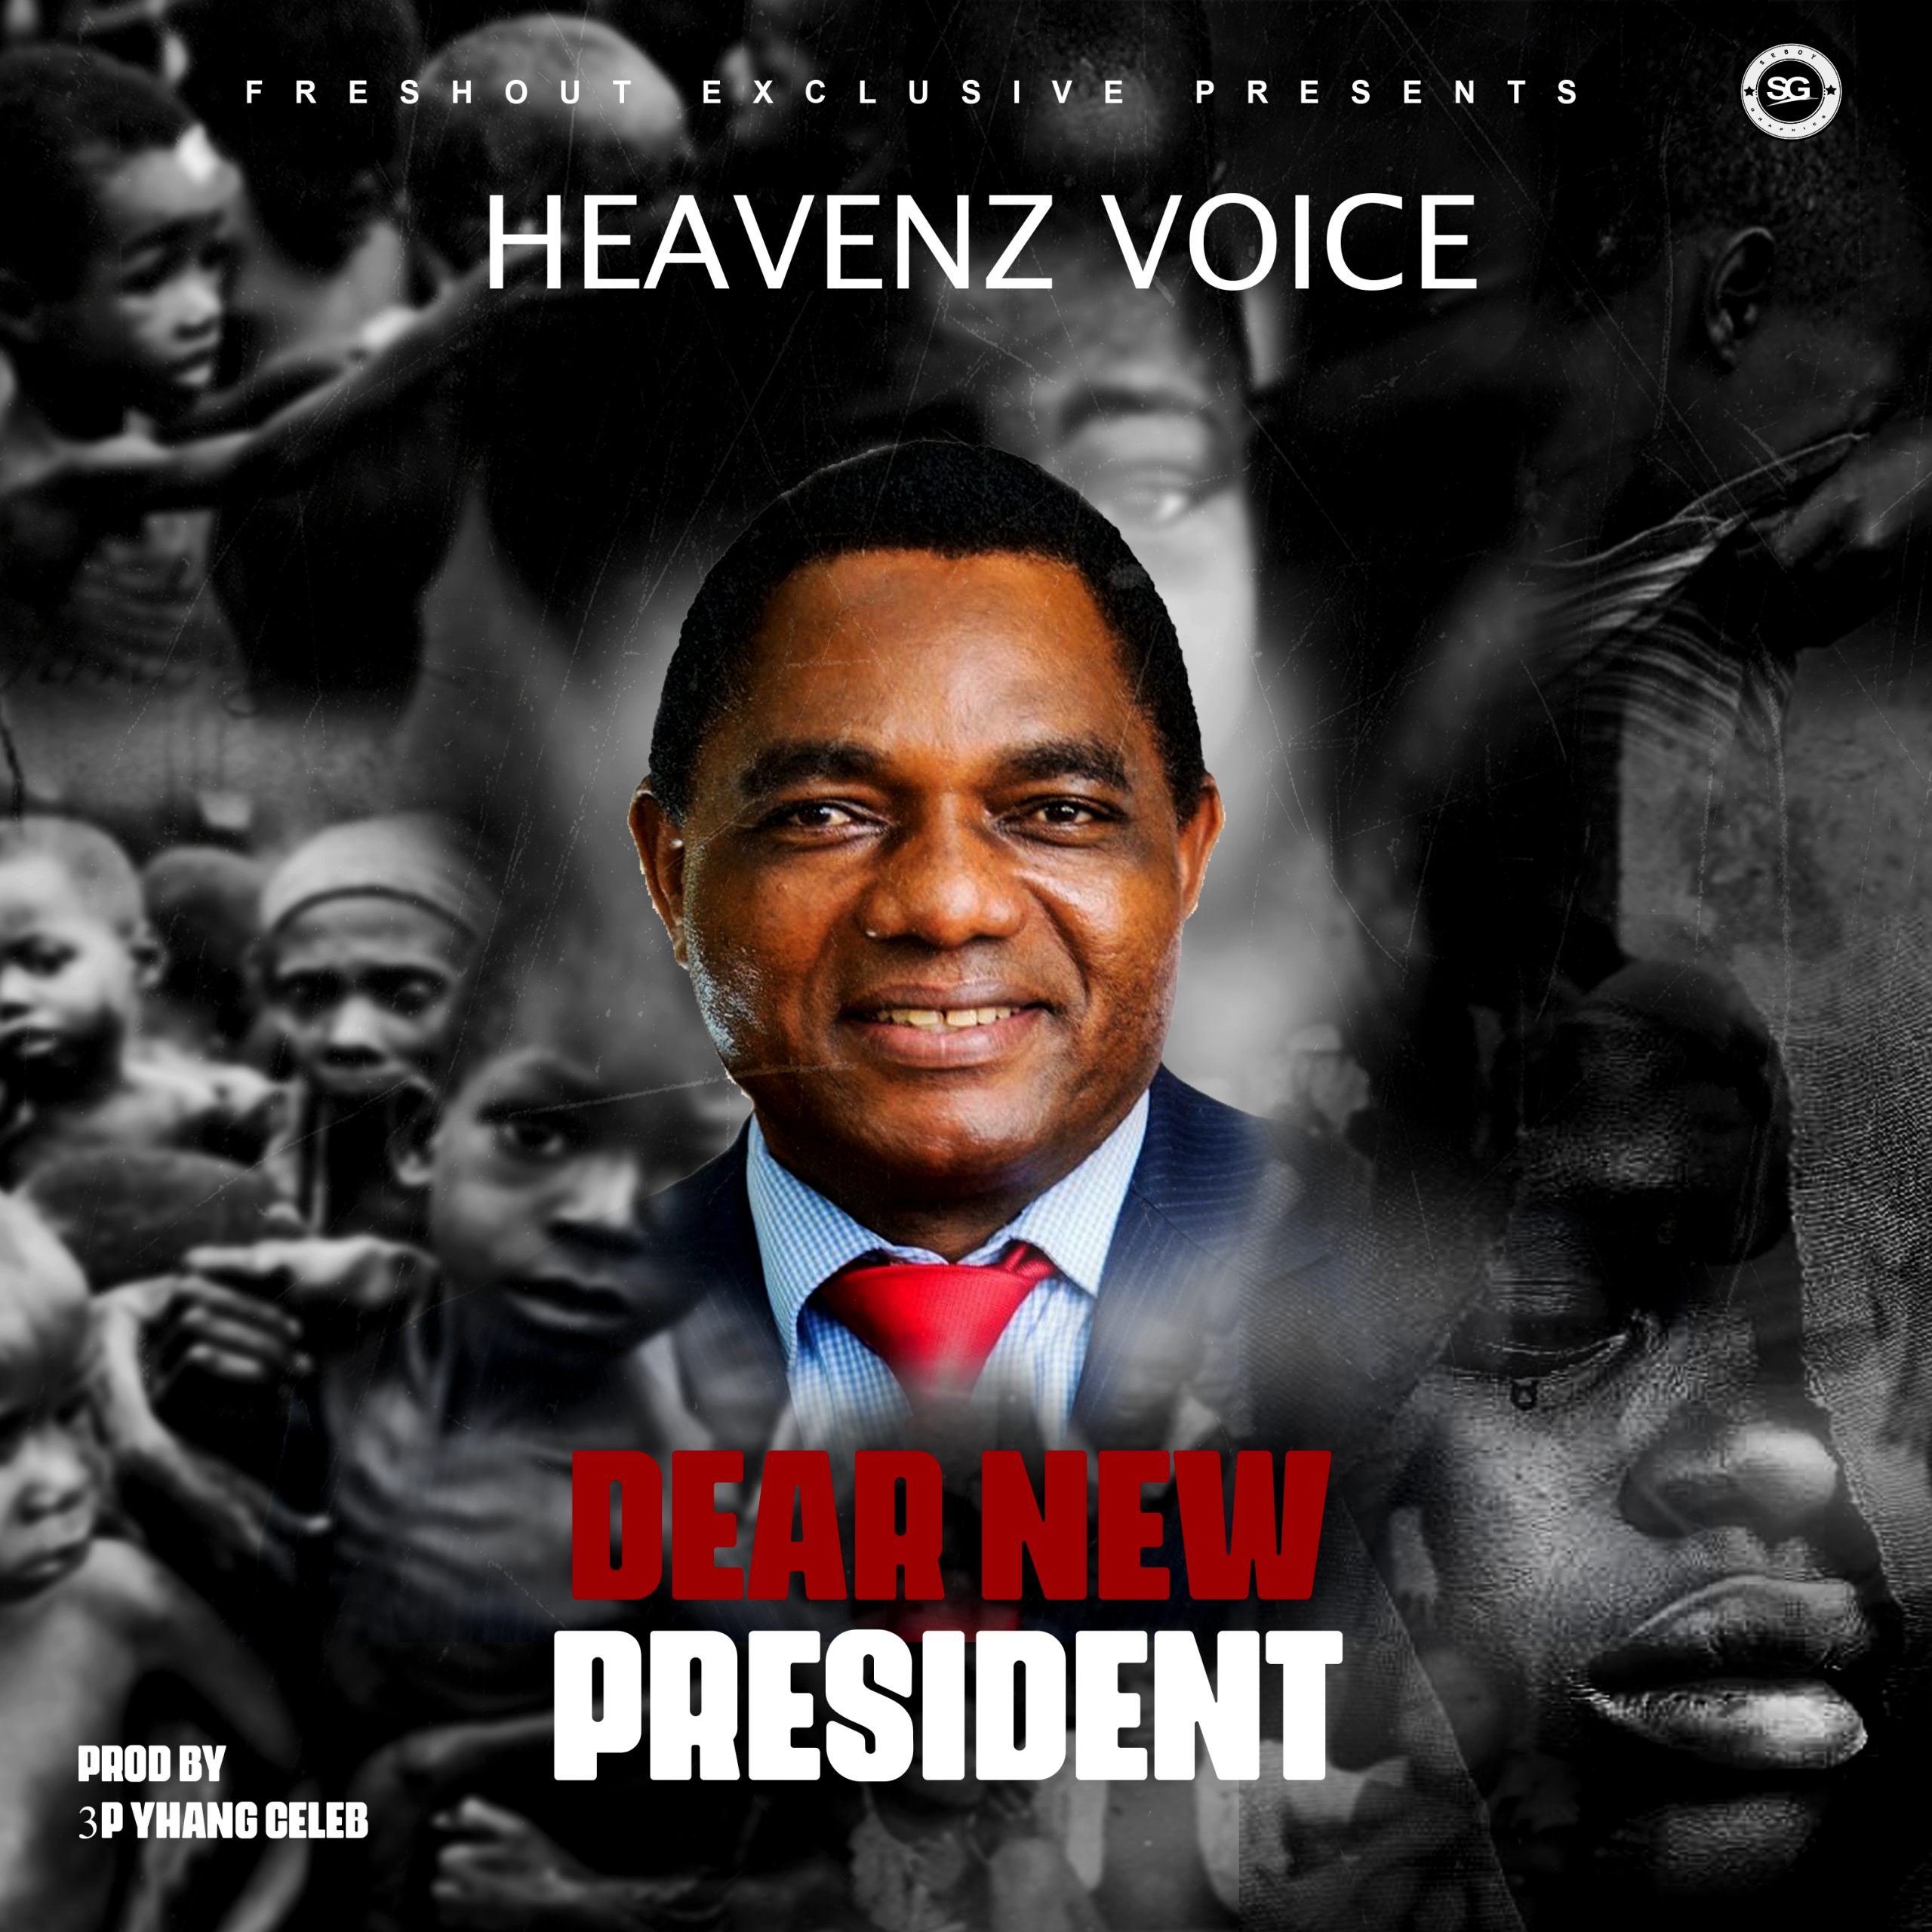 Heavenz Voice - Dear New President (Prod Yhang Celeb)